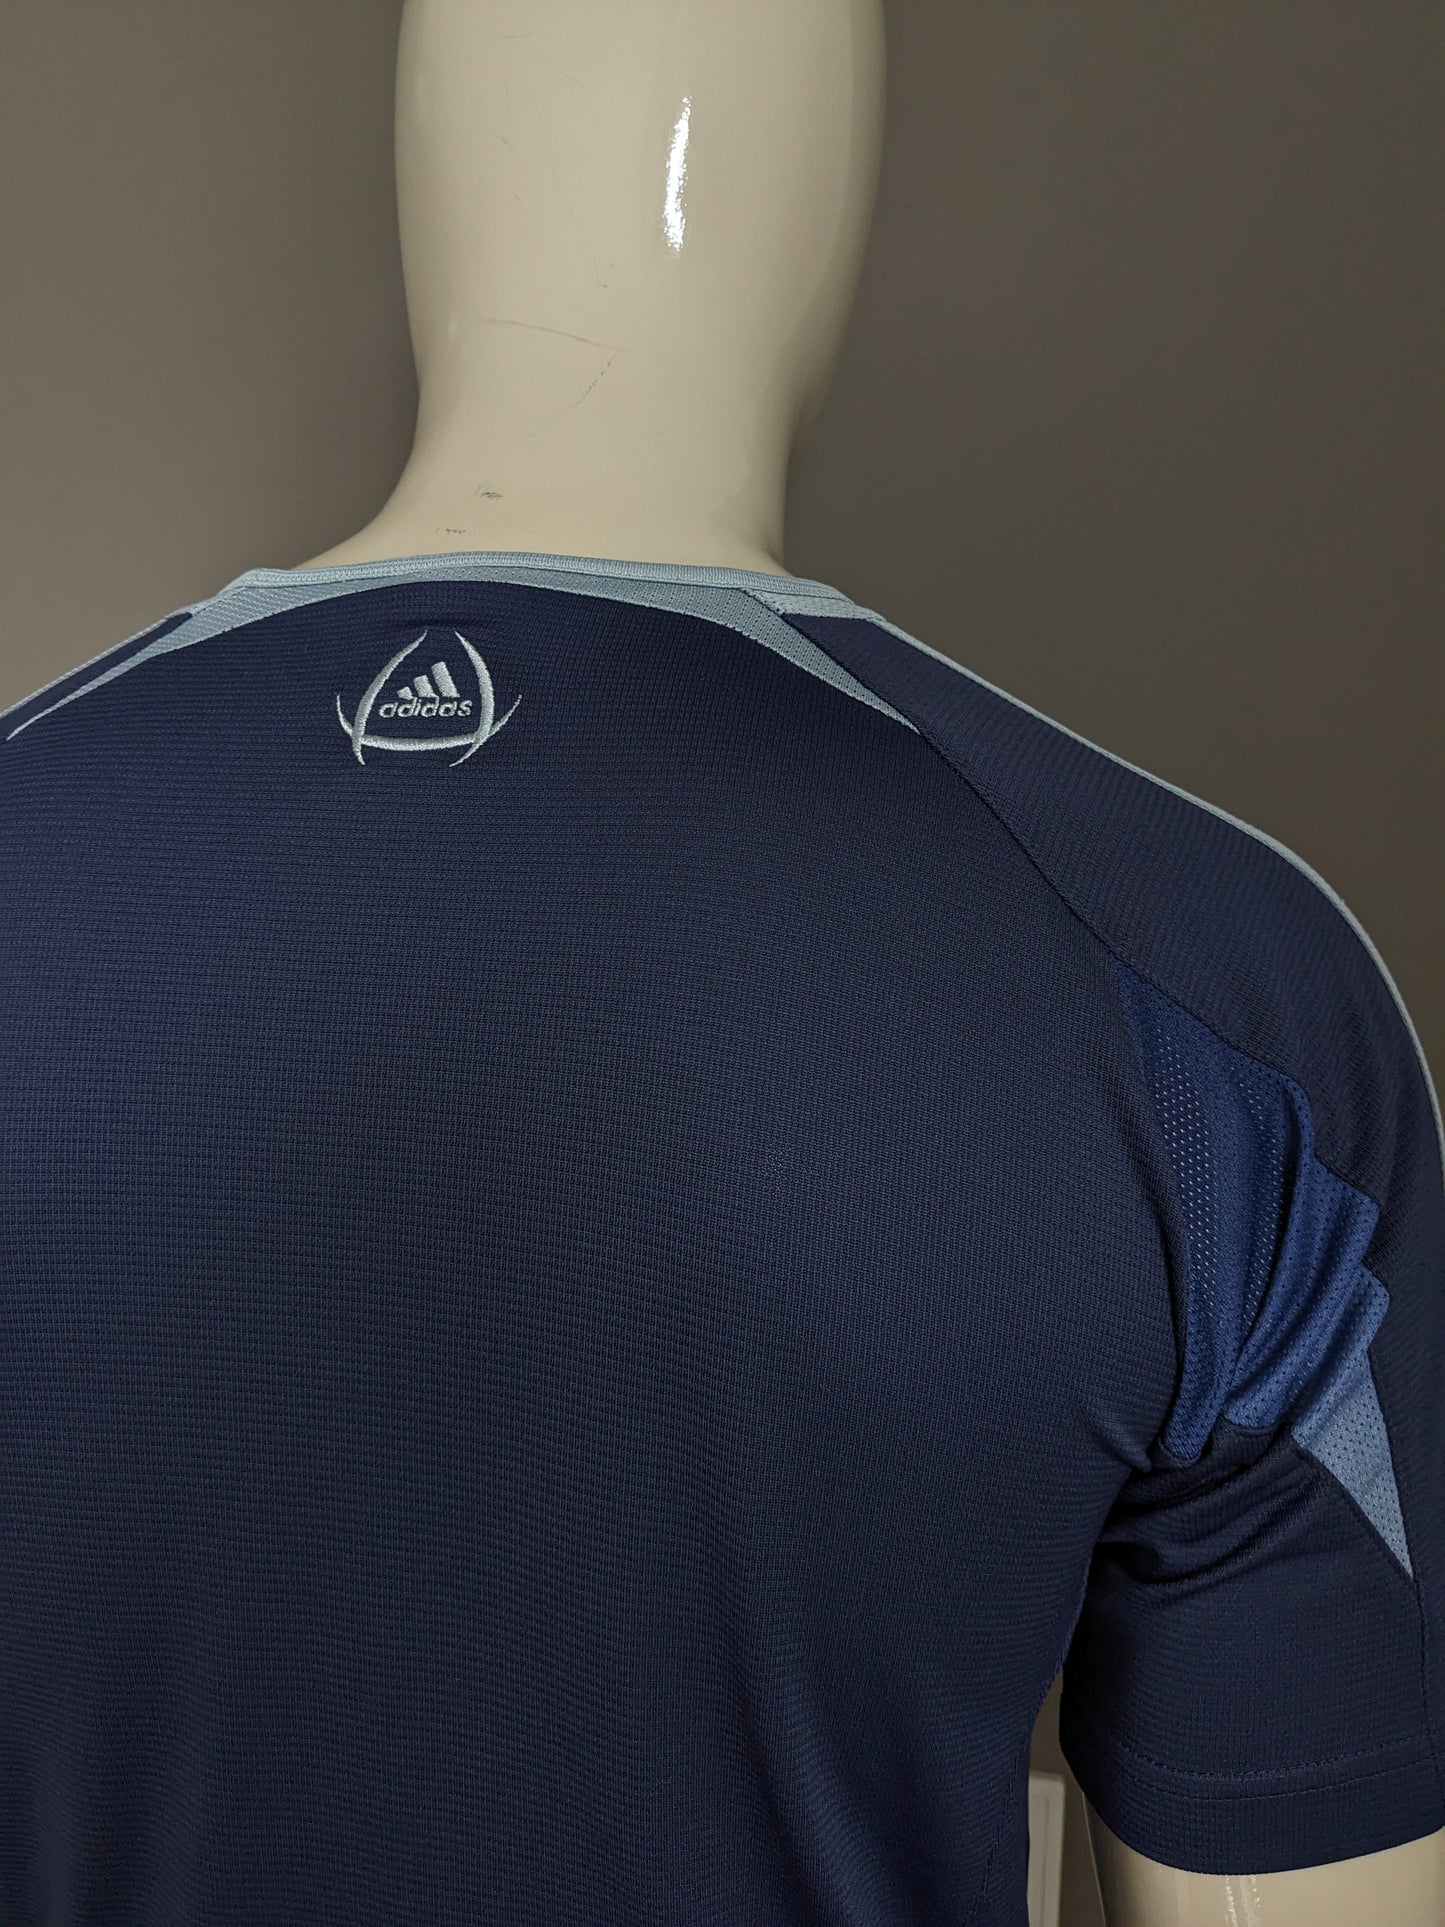 Adidas Sporthemd. Blau gefärbt. Größe S.